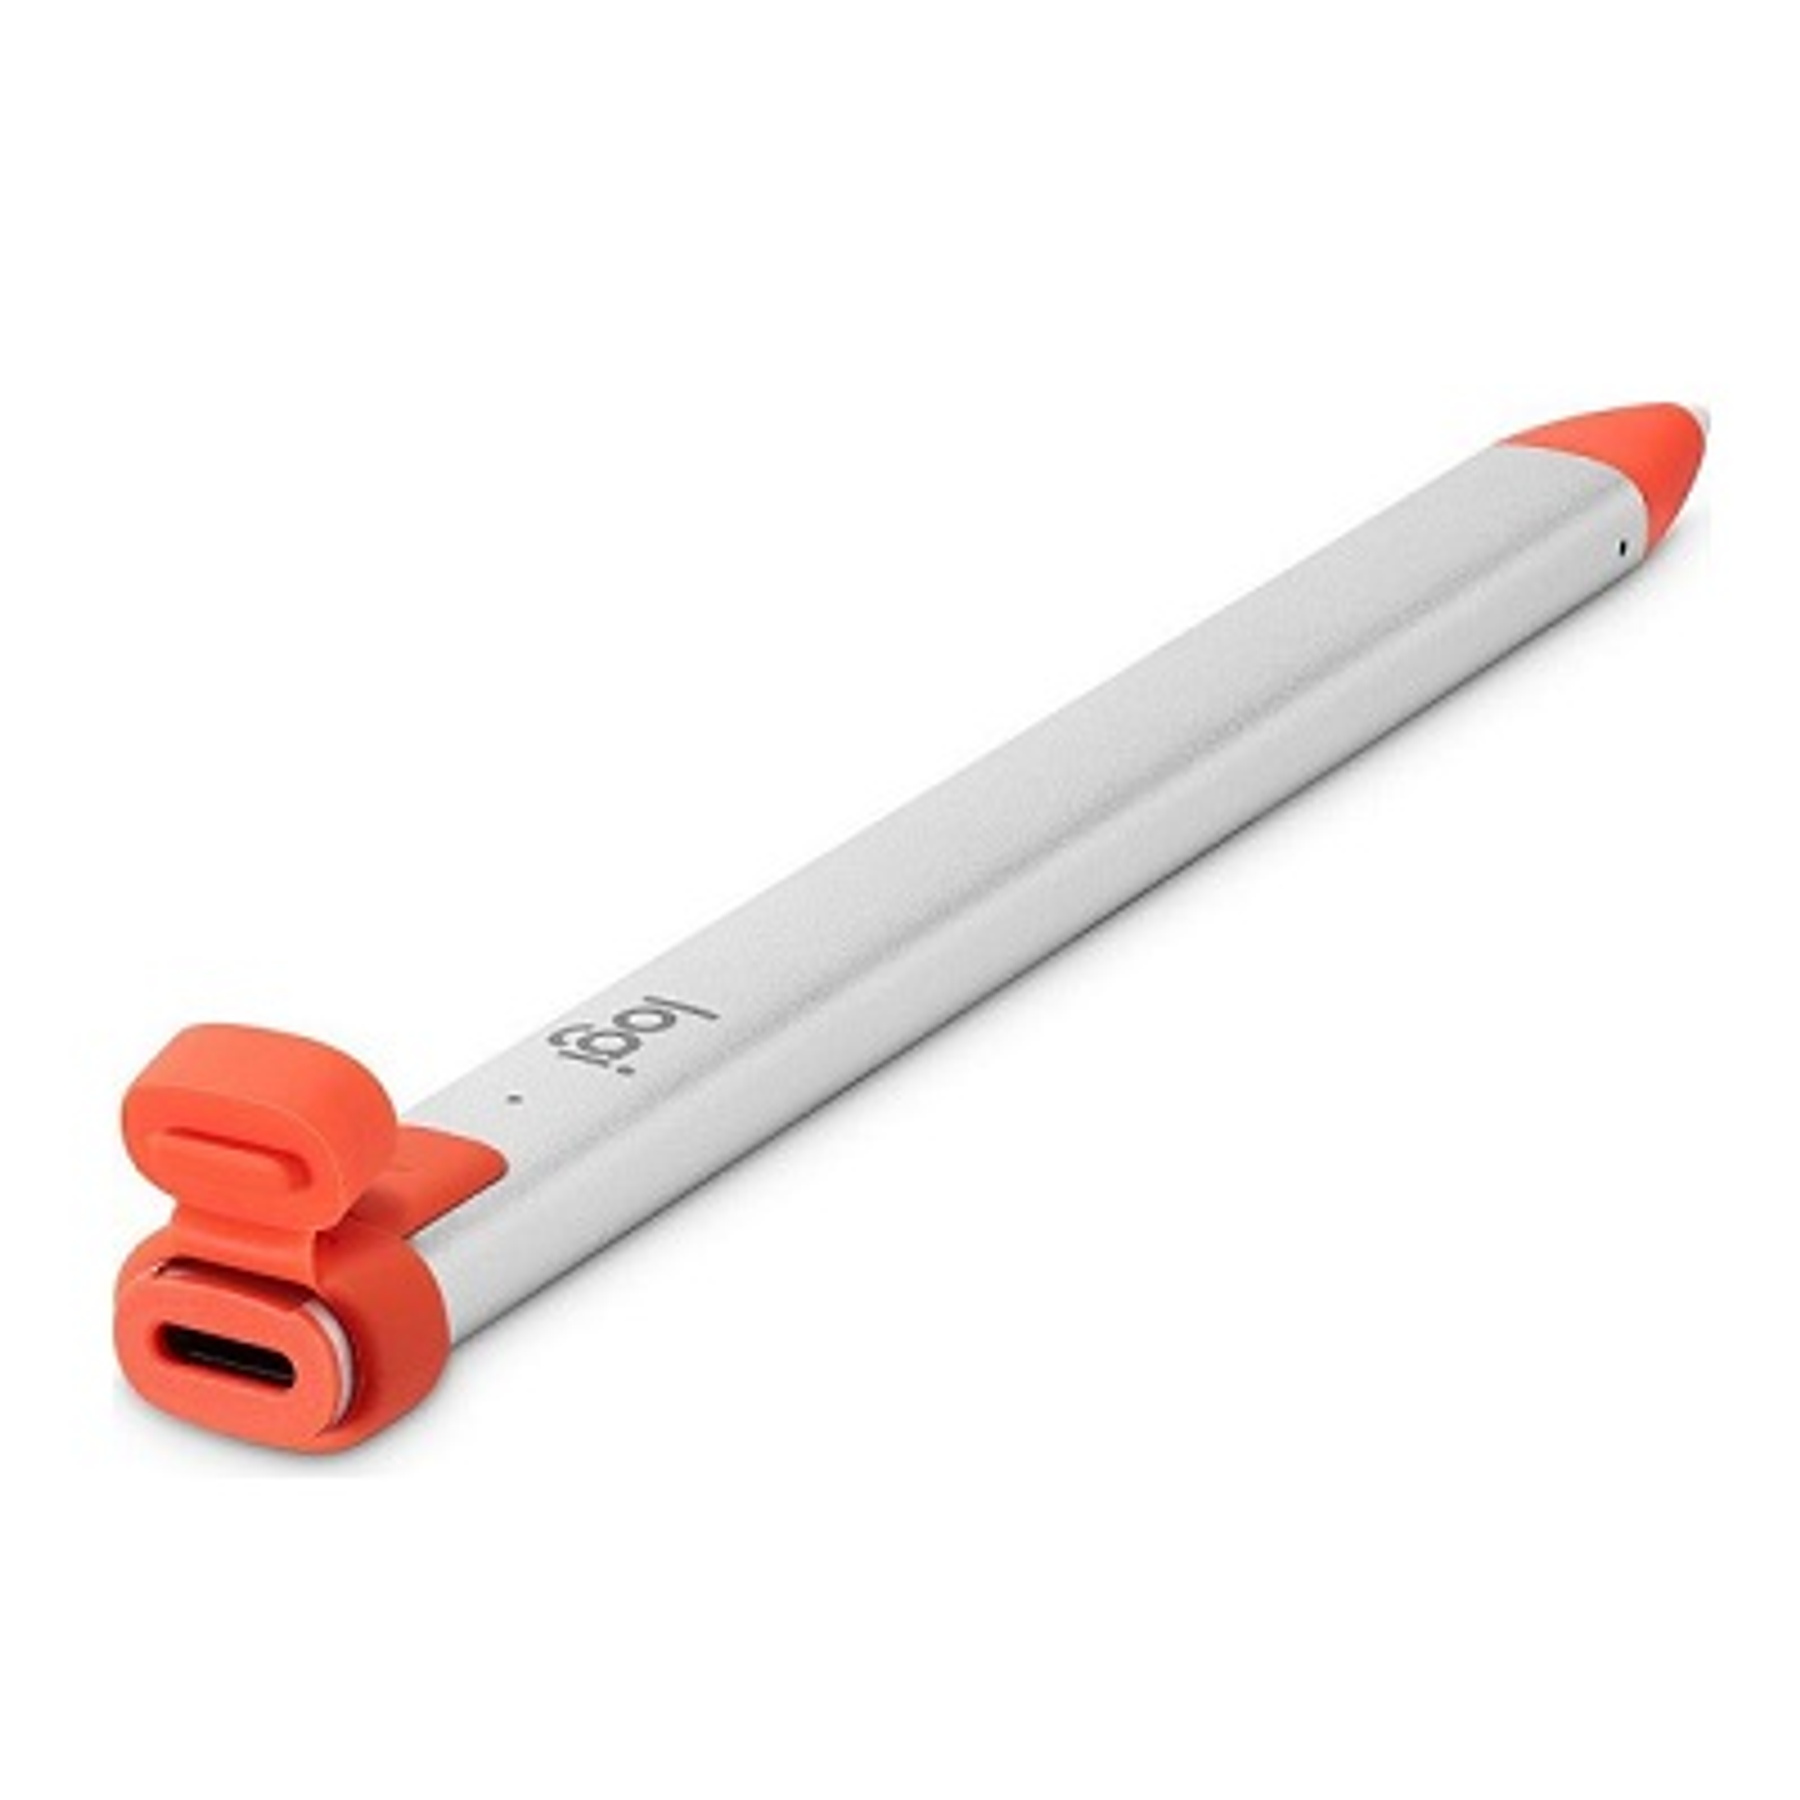 Logitech Crayon Lápiz Digital para iPad 